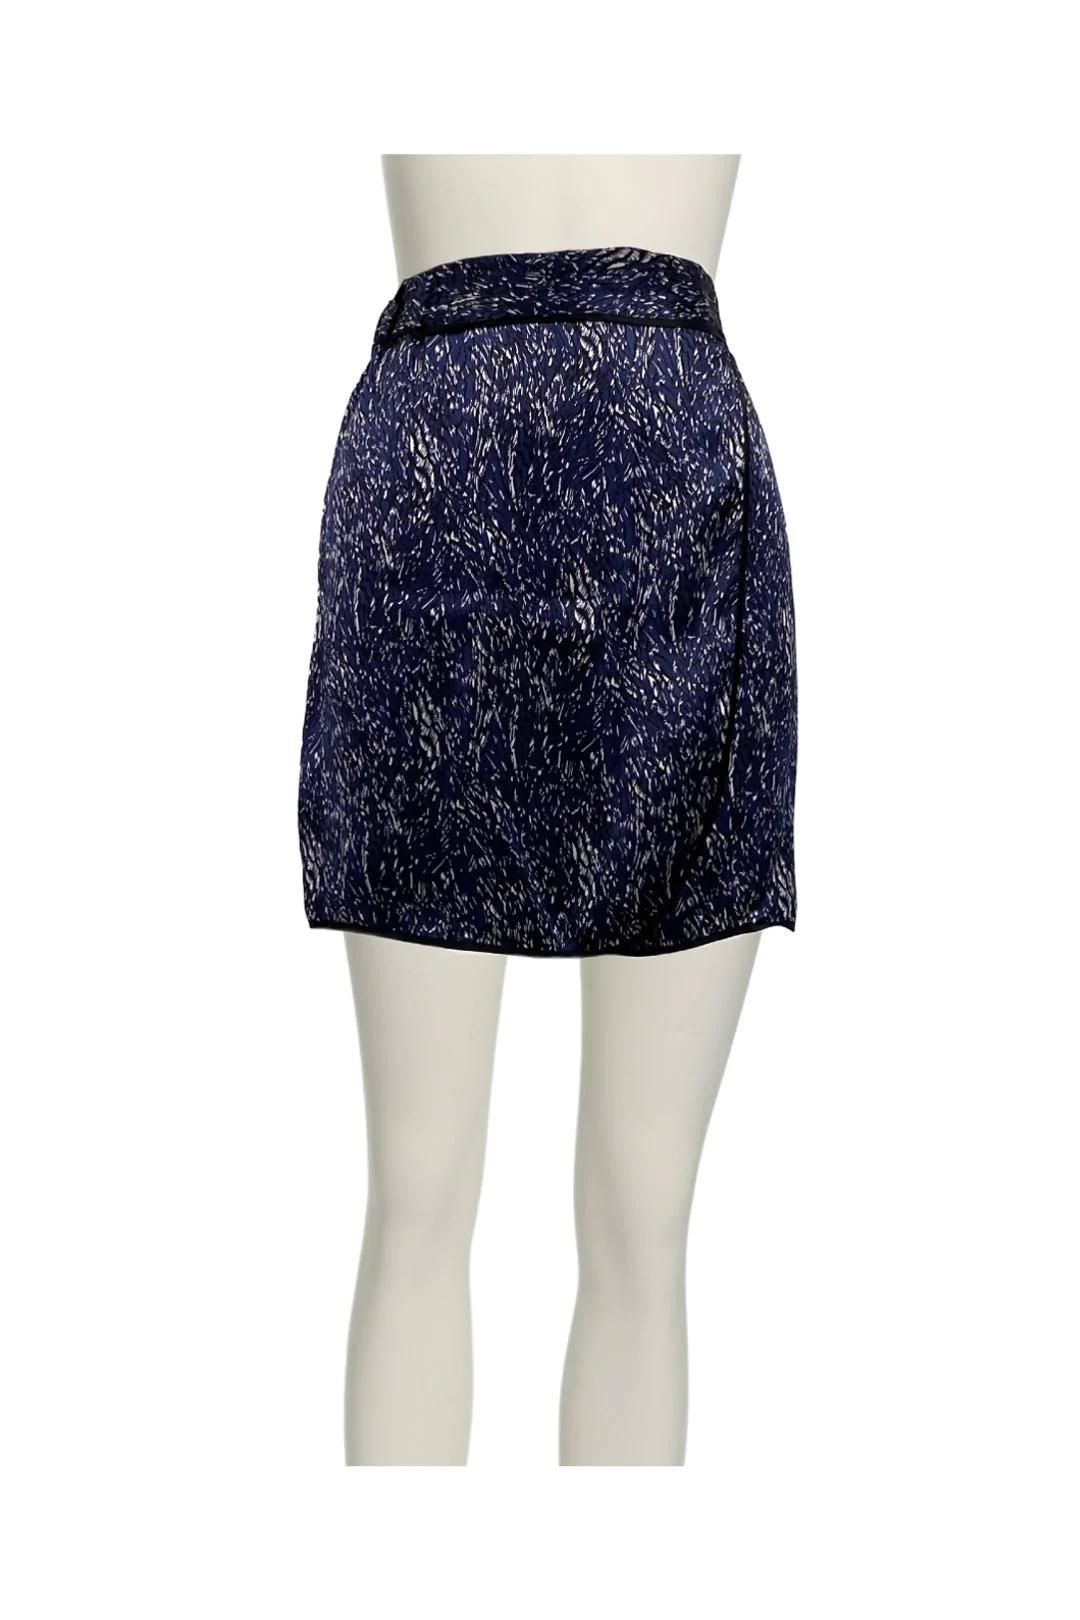 Comptoir des cotonniers - Rabriel Print Blue Mini Skirt